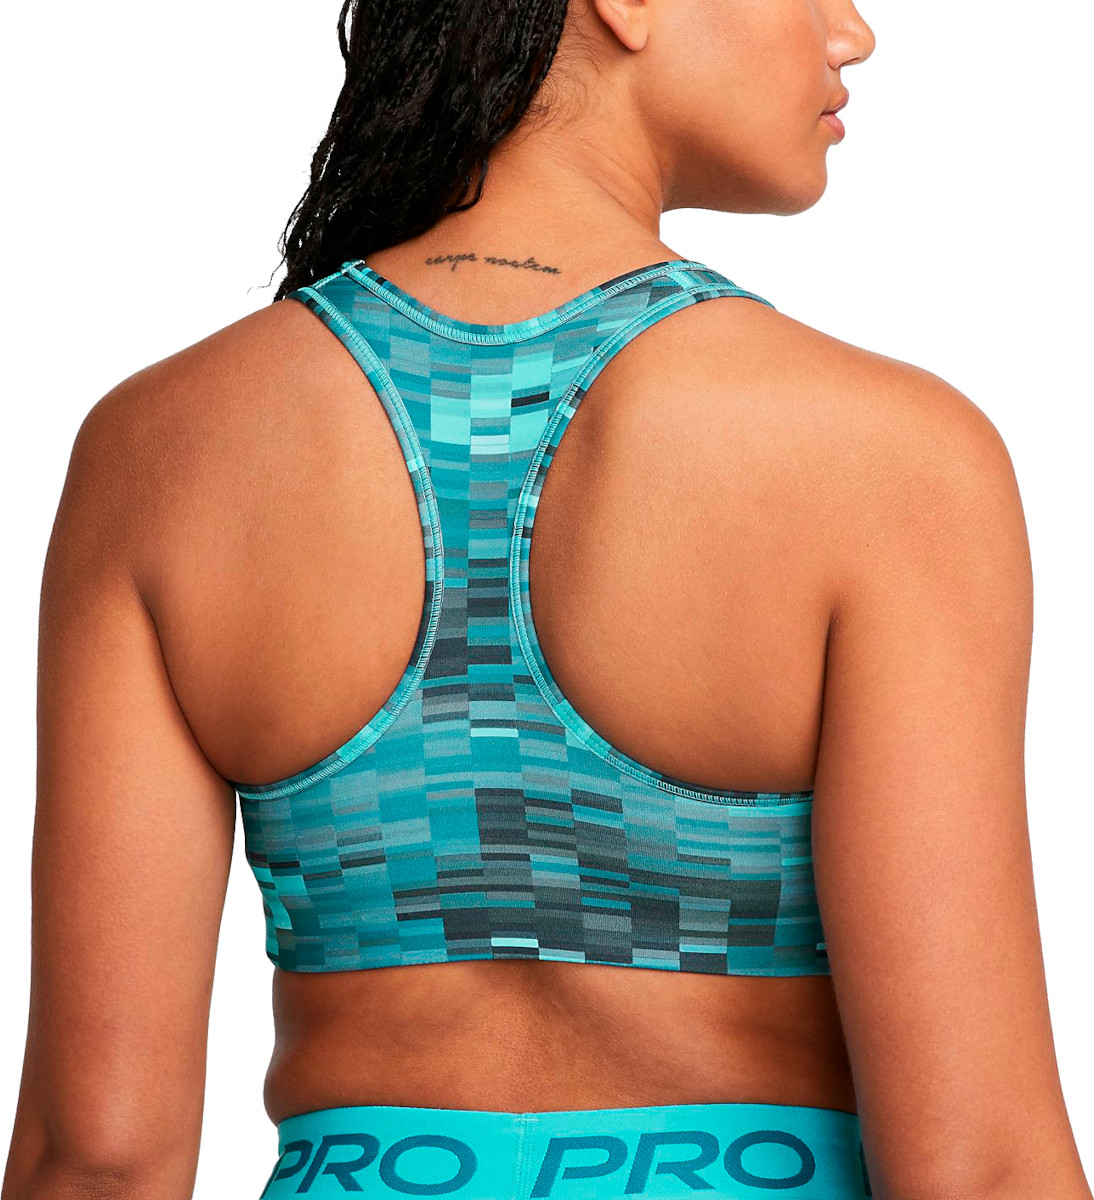 Nike Swoosh Women Medium-Support 1-Piece Pad Allover Print Bra 